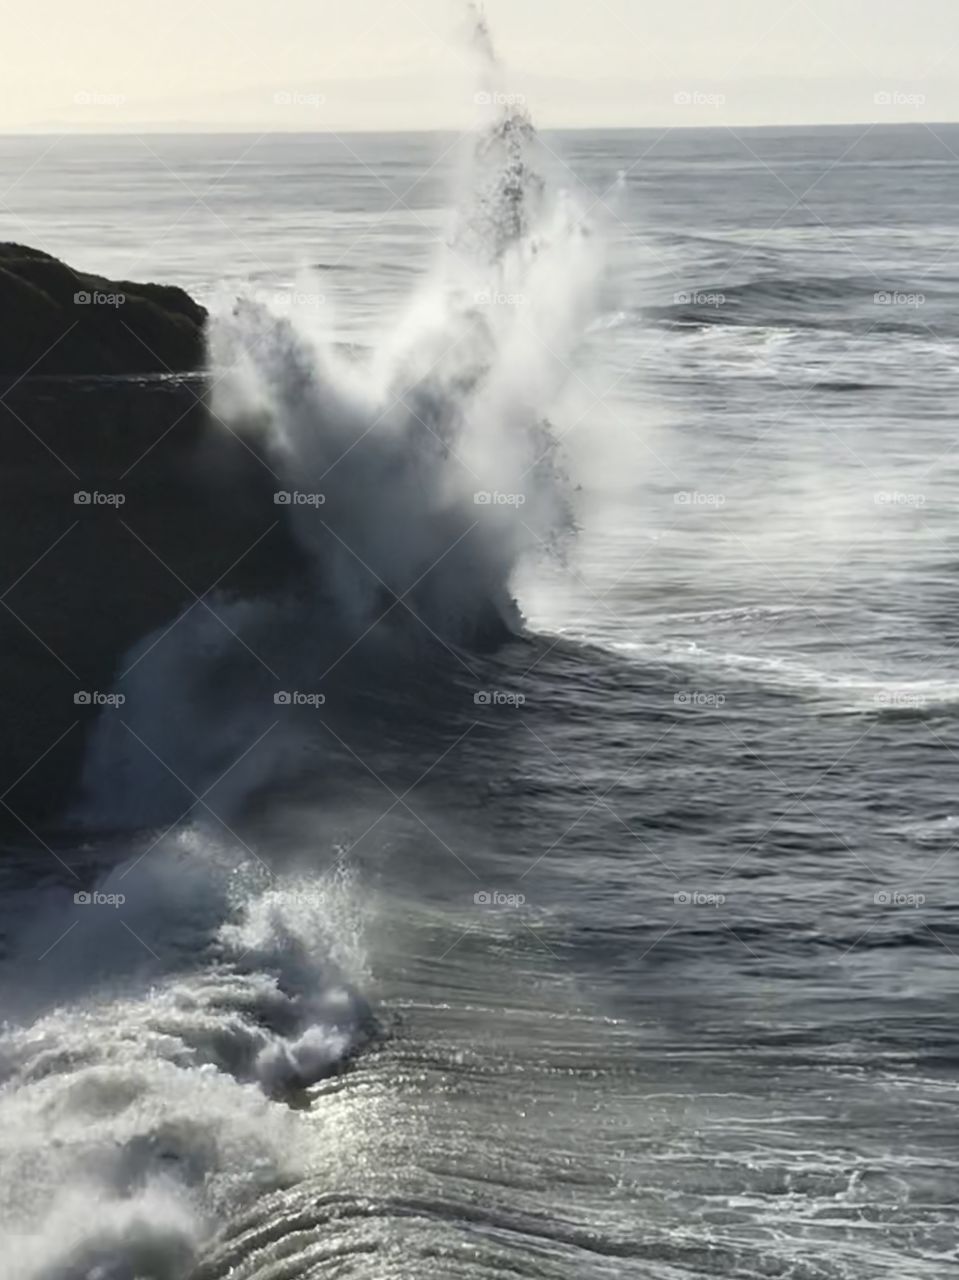 Santa Cruz waves hitting the shore with a vengeance!